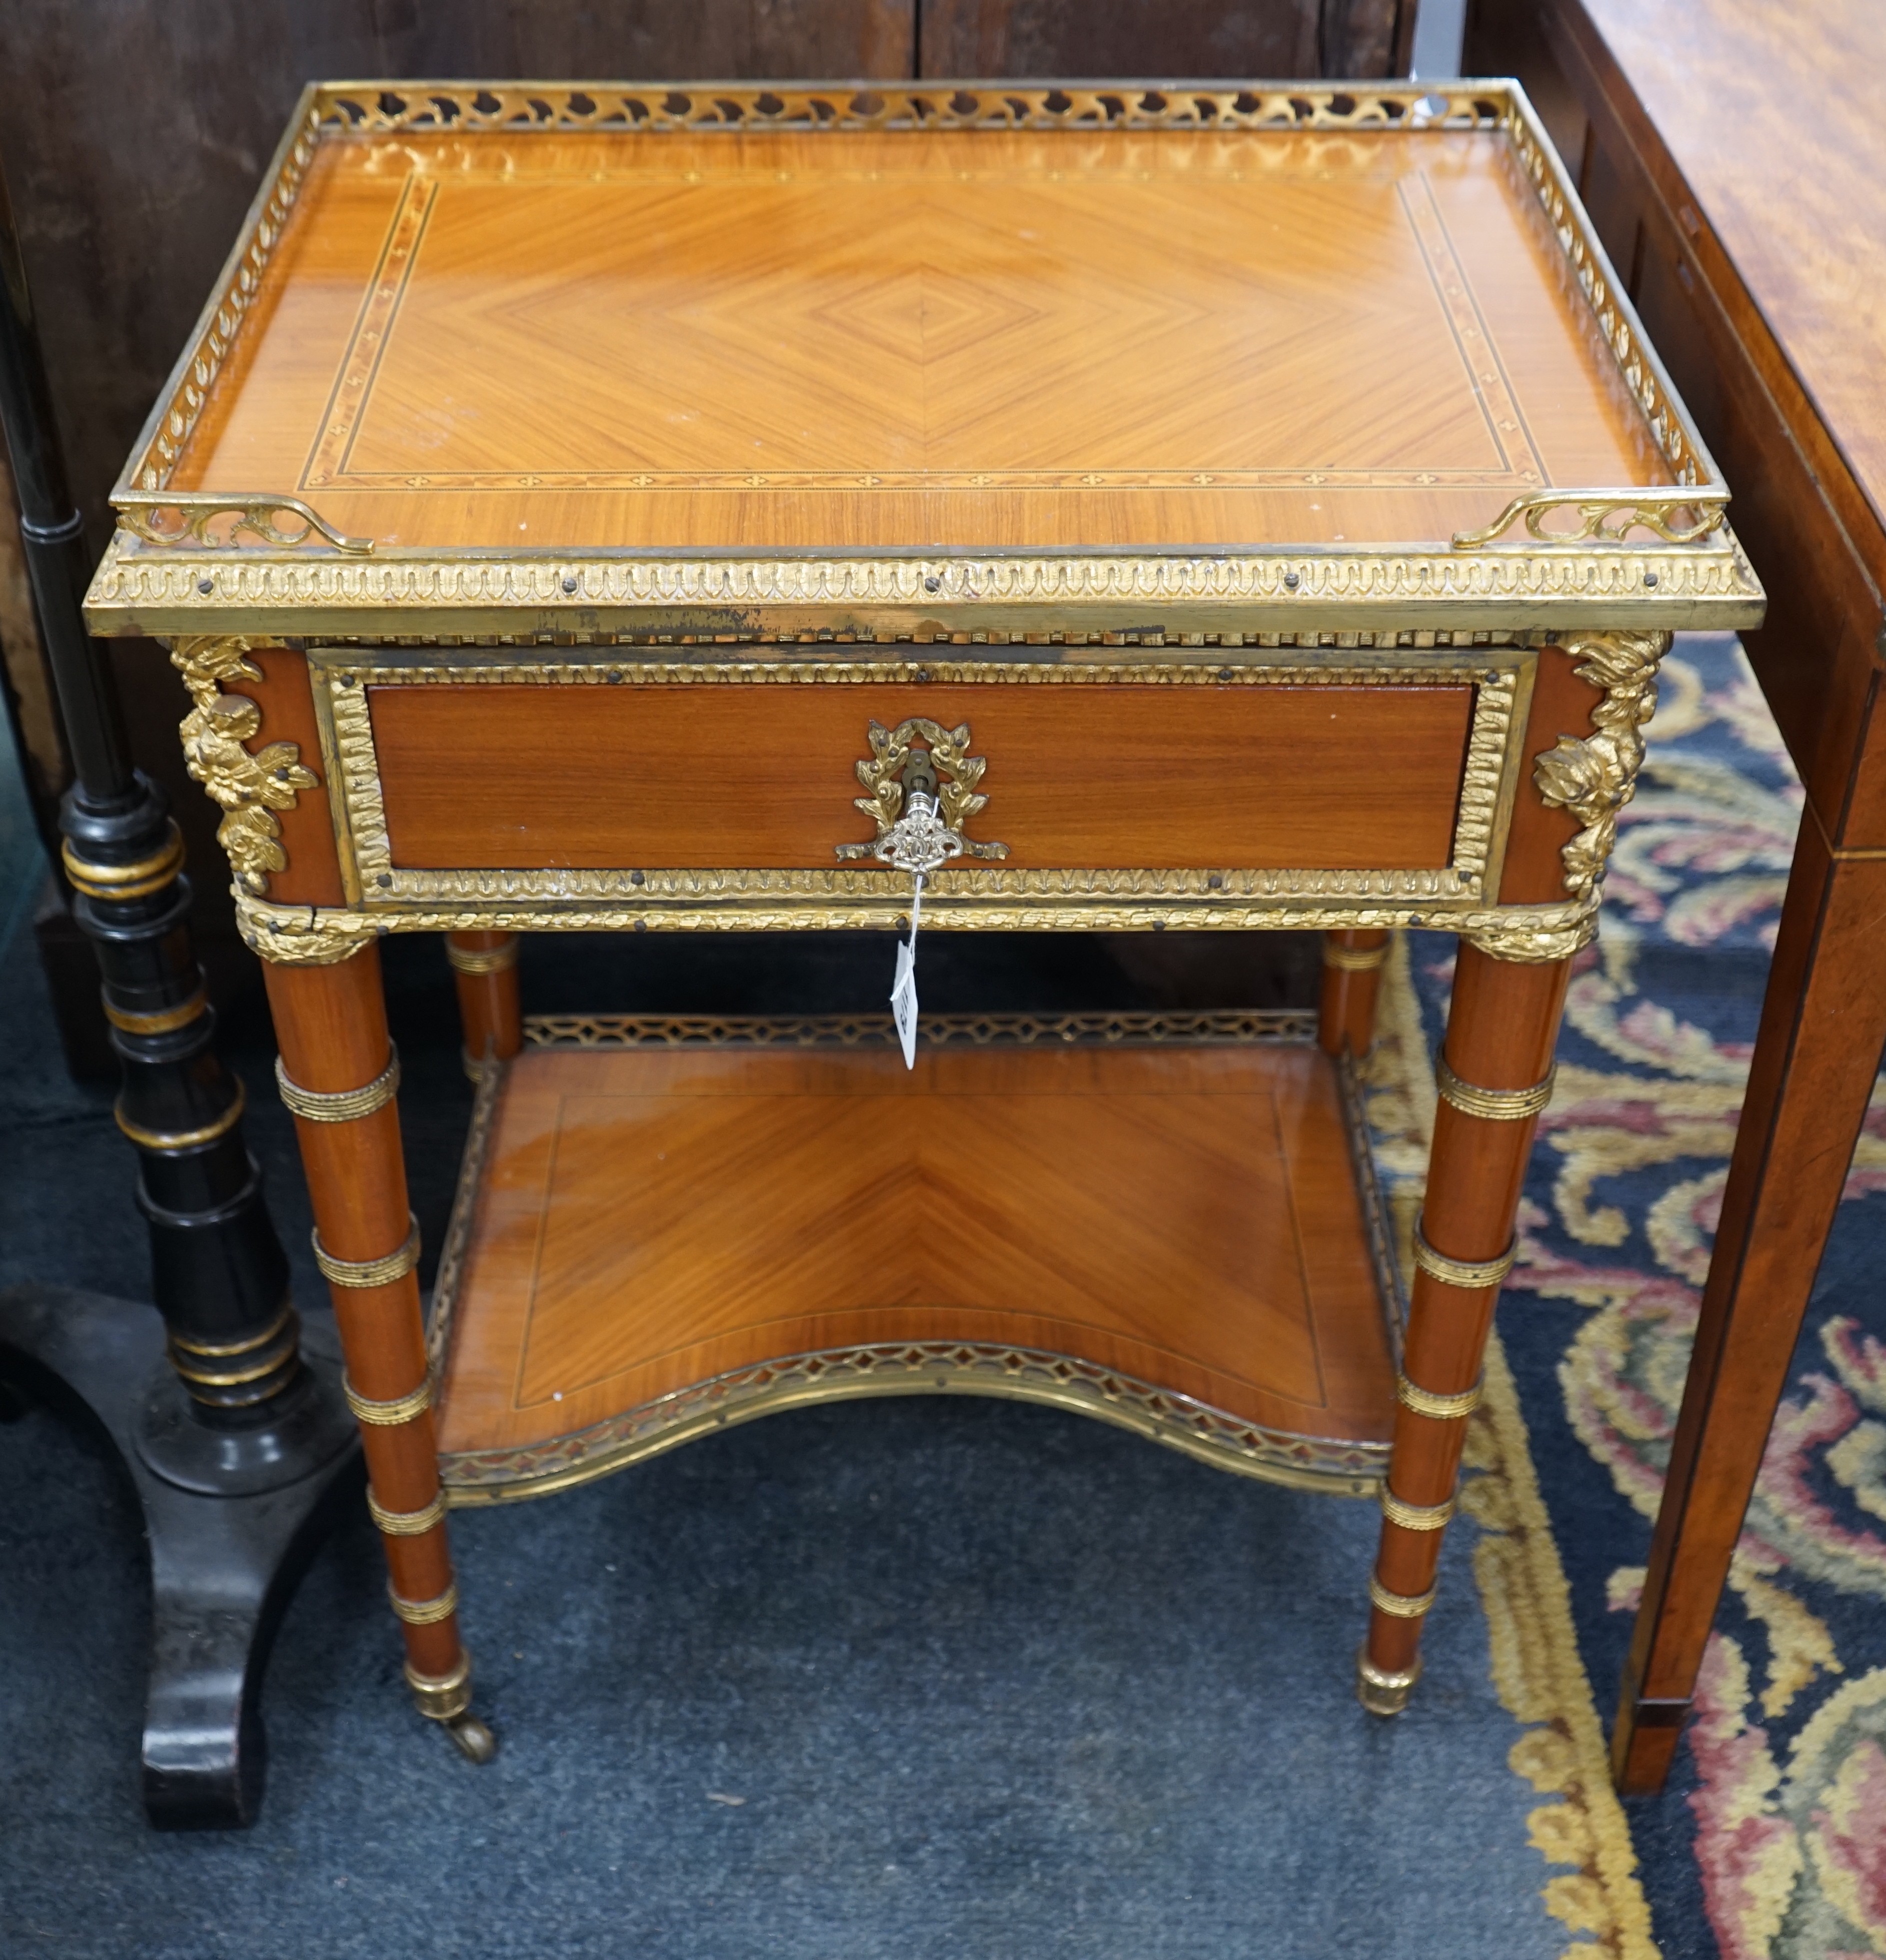 A Louis XVI design gilt metal mounted side table, width 60cm, depth 44cm, height 74cm